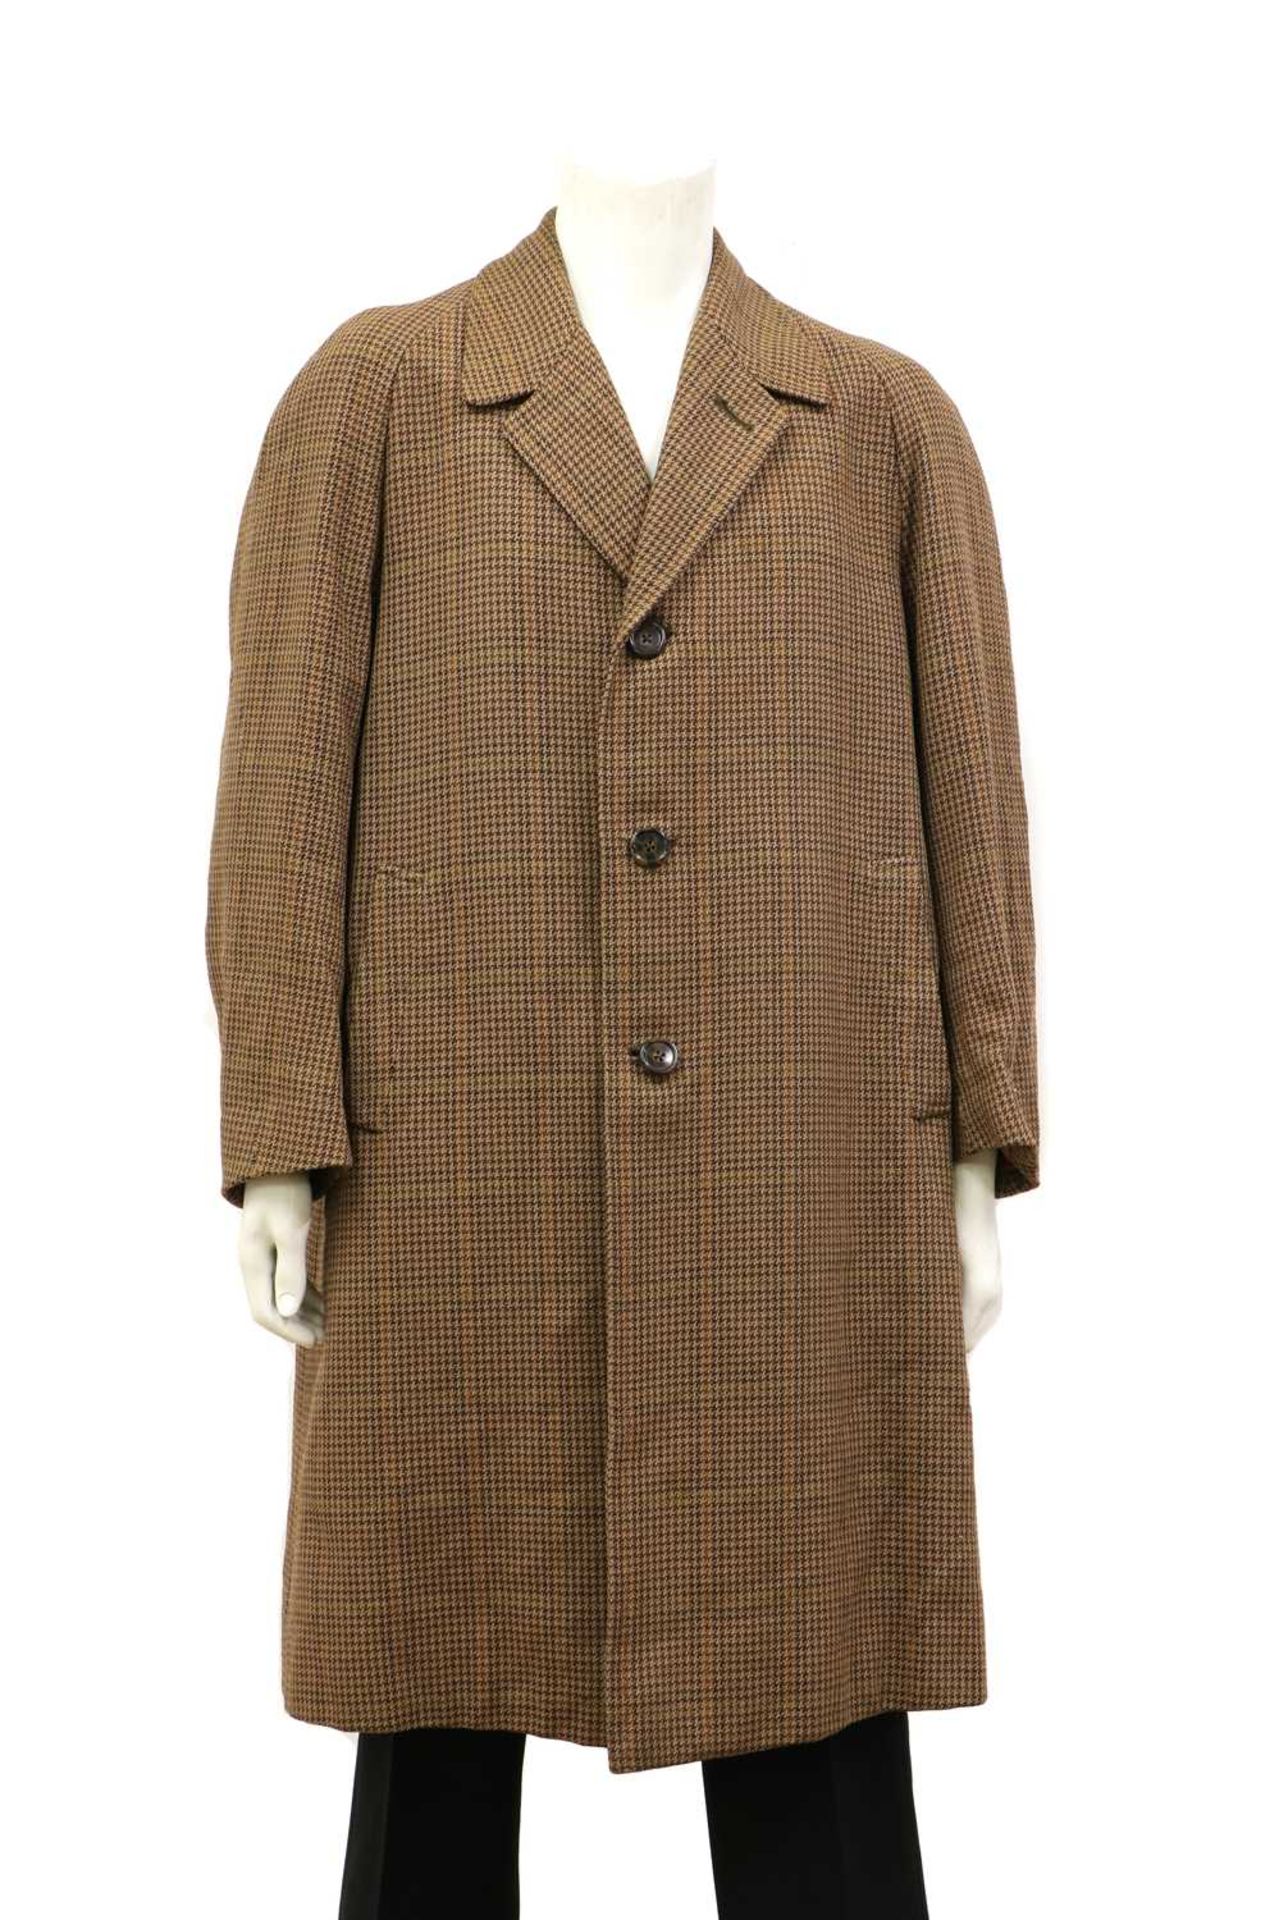 A brown tweed single-breasted overcoat,